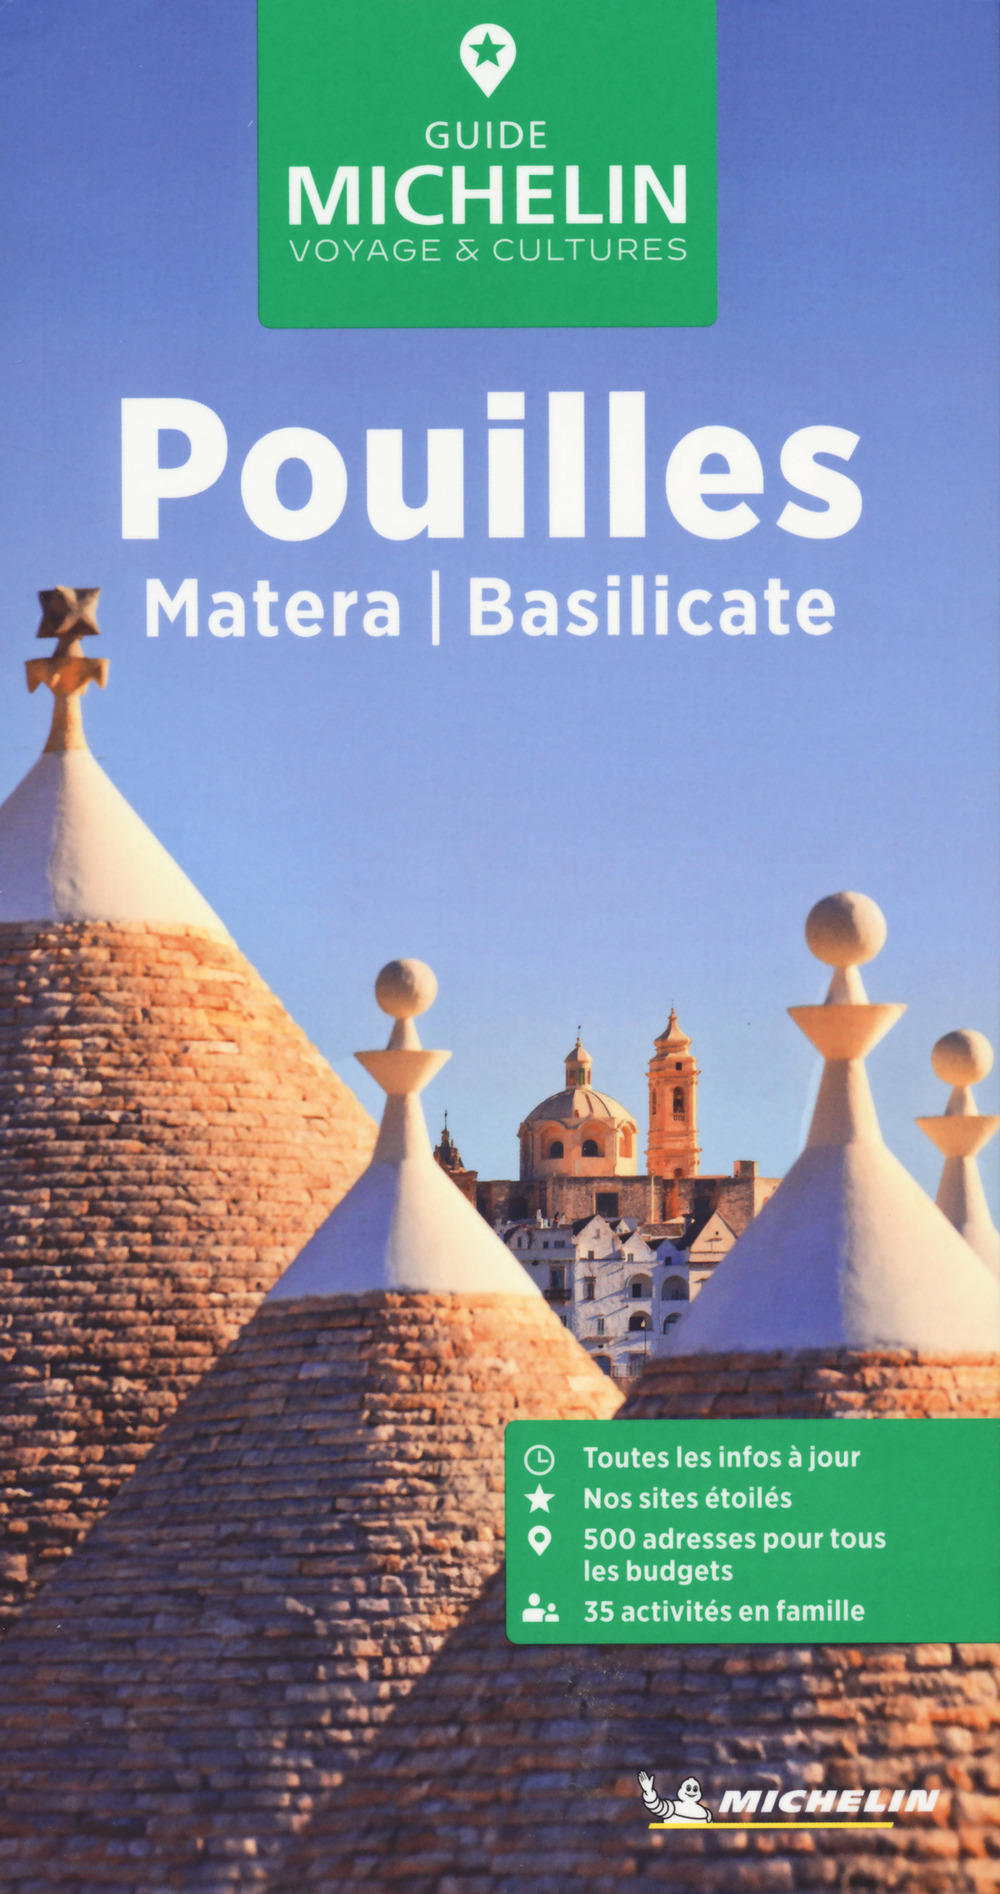 Pouilles. Matera et Basilicate